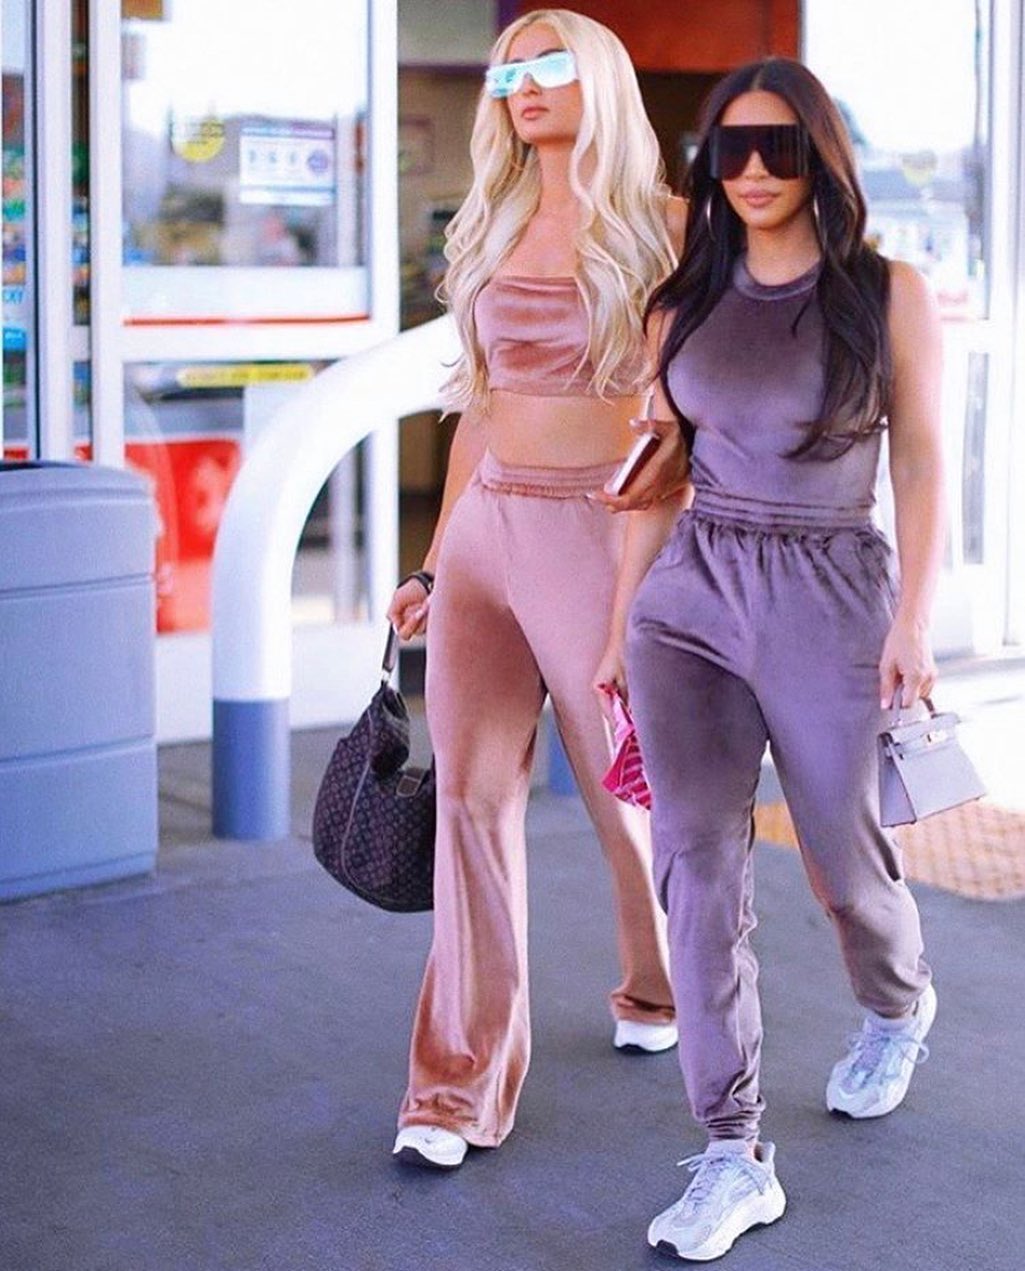 Photos n°3 : Paris Hilton and Kim Kardashian Reliving the Glory Days!